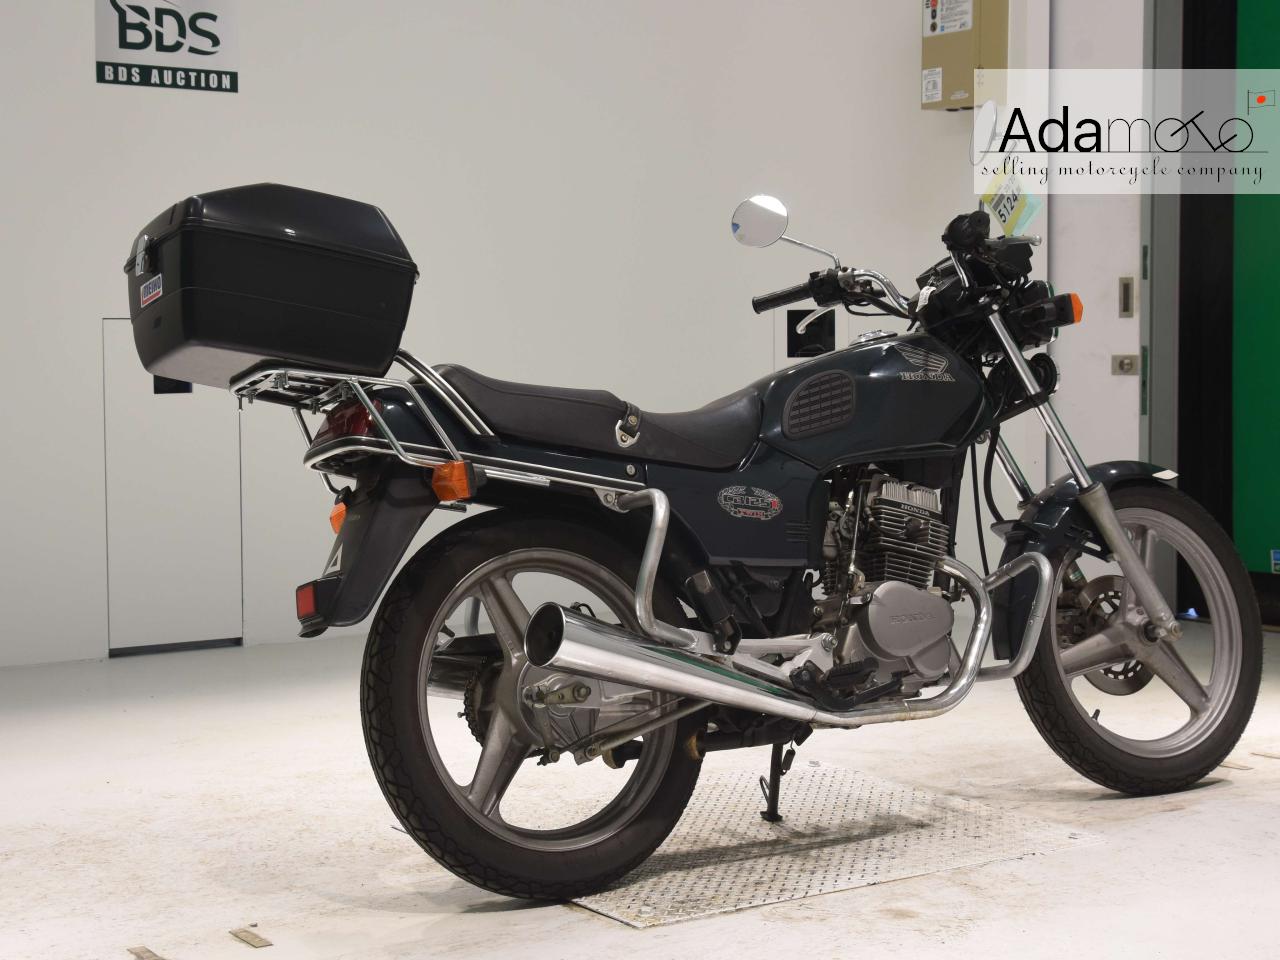 Honda CB125T - Adamoto - Motorcycles from Japan